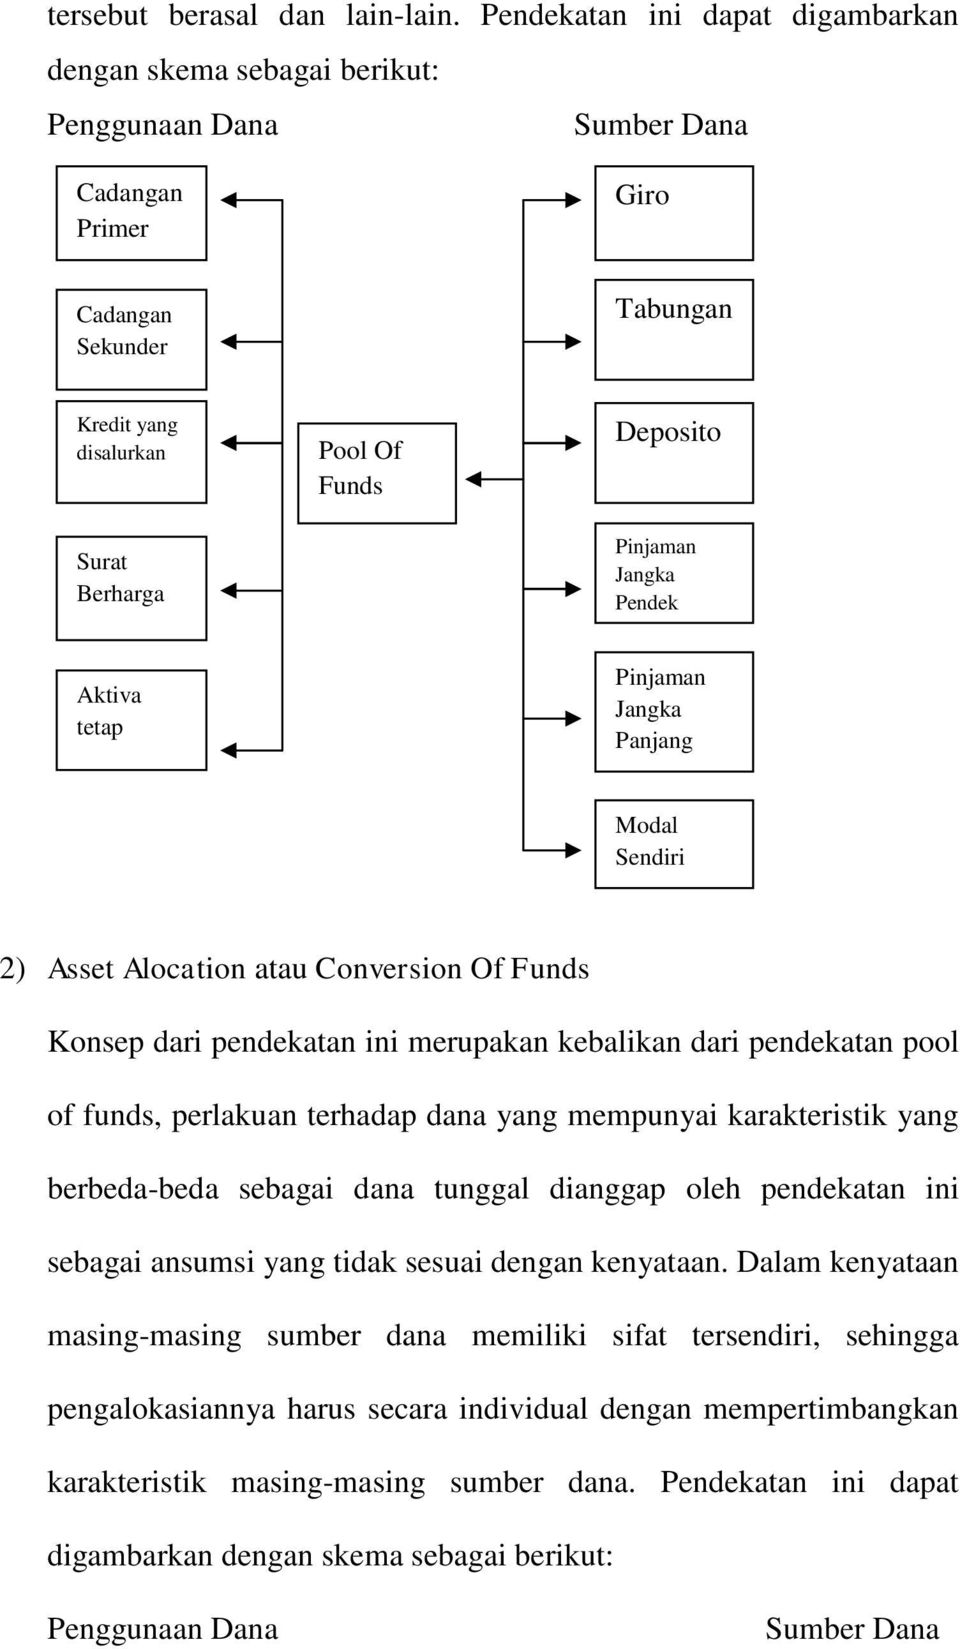 Pinjaman Jangka Pendek Aktiva tetap Pinjaman Jangka Panjang Modal Sendiri 2) Asset Alocation atau Conversion Of Funds Konsep dari pendekatan ini merupakan kebalikan dari pendekatan pool of funds,